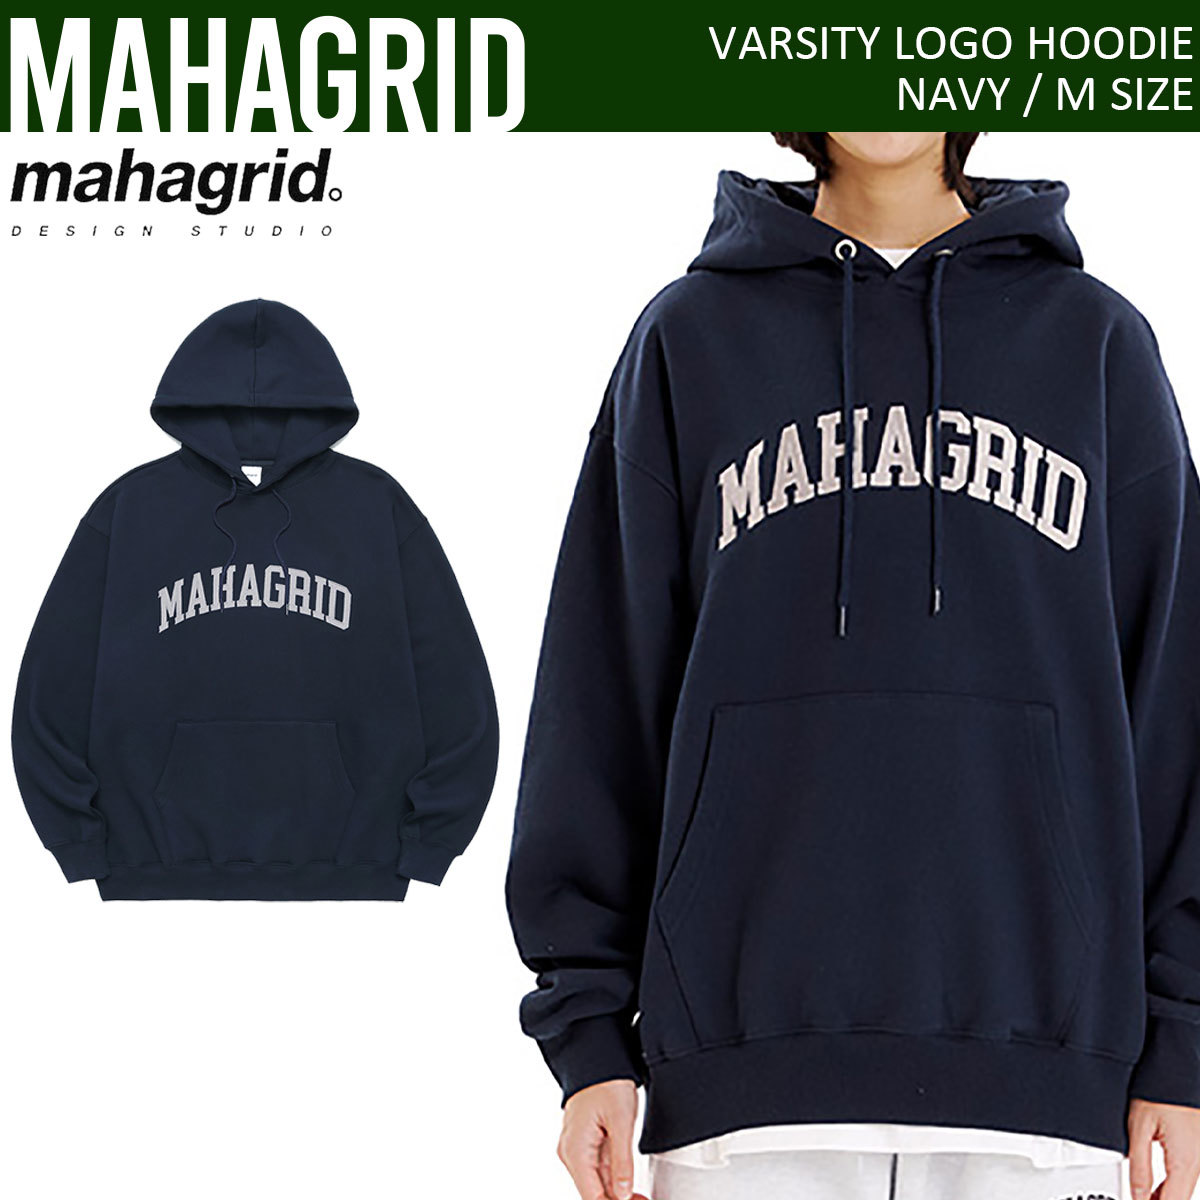 mahagrid 】 VARSITY LOGO HOODIE マハグリッド 正規品 ロゴ刺繍